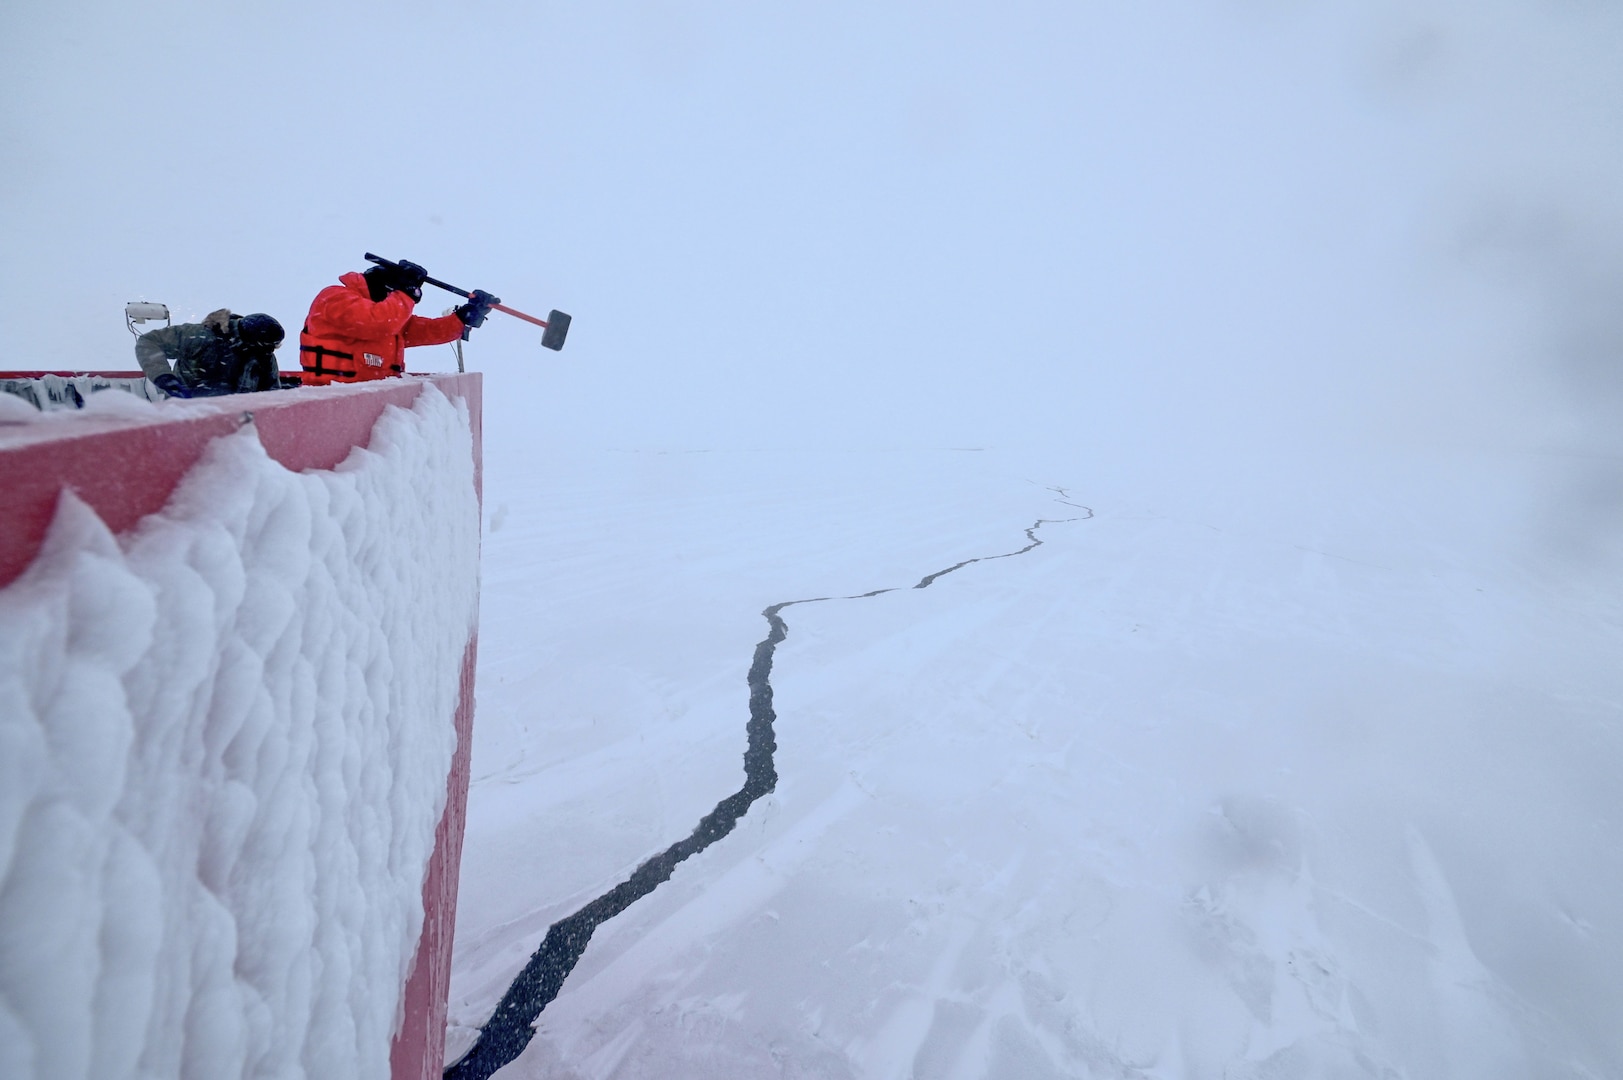 A Break in the Silence: Anecdote from a U.S. Coast Guard Icebreaker’s Winter Arctic Patrol